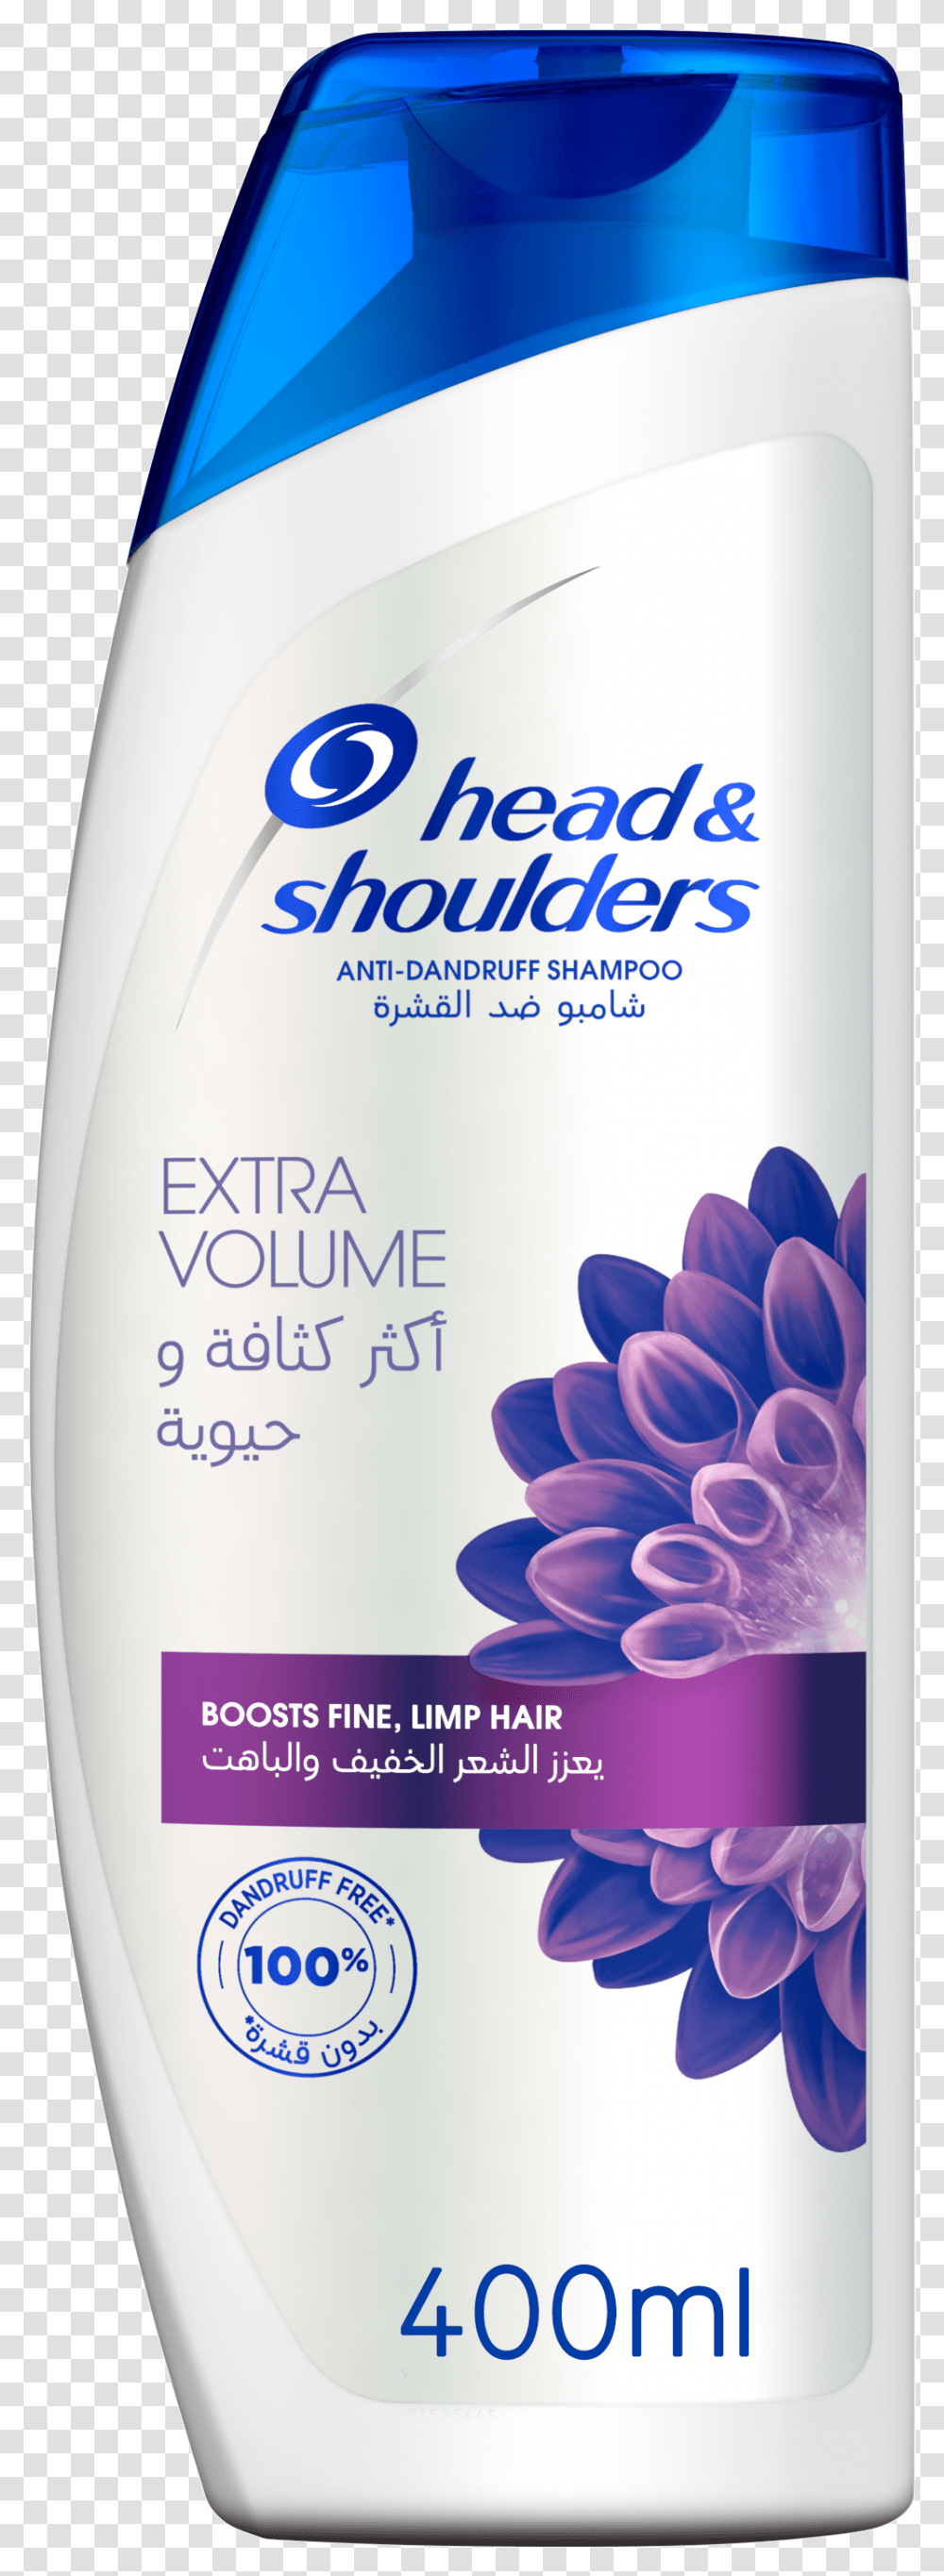 Head And Shoulders Shampoo, Bottle, Shaker, Mobile Phone, Electronics Transparent Png